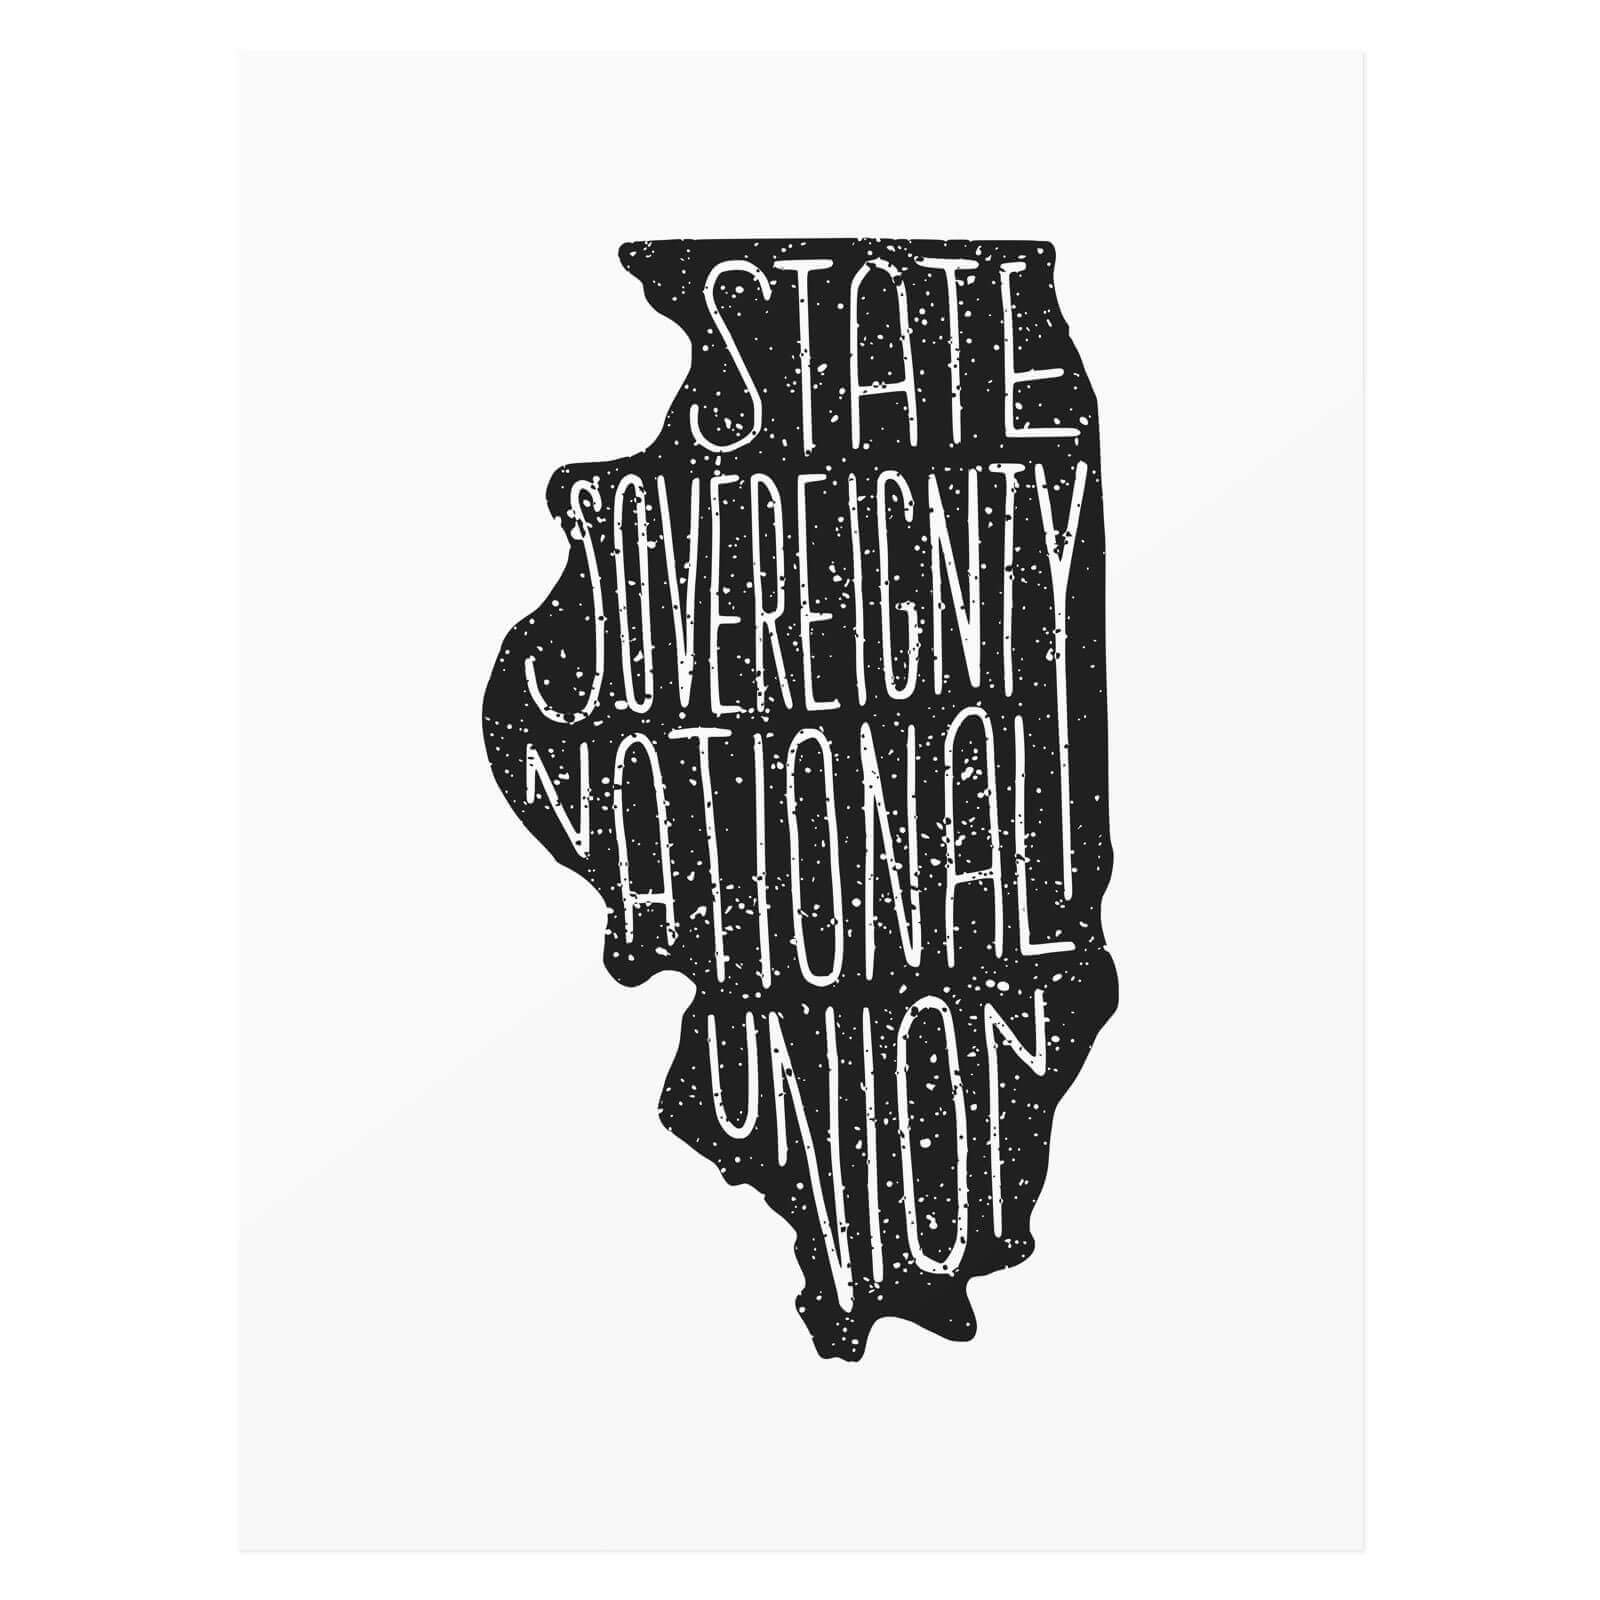 Illinois — State sovereignty, national union